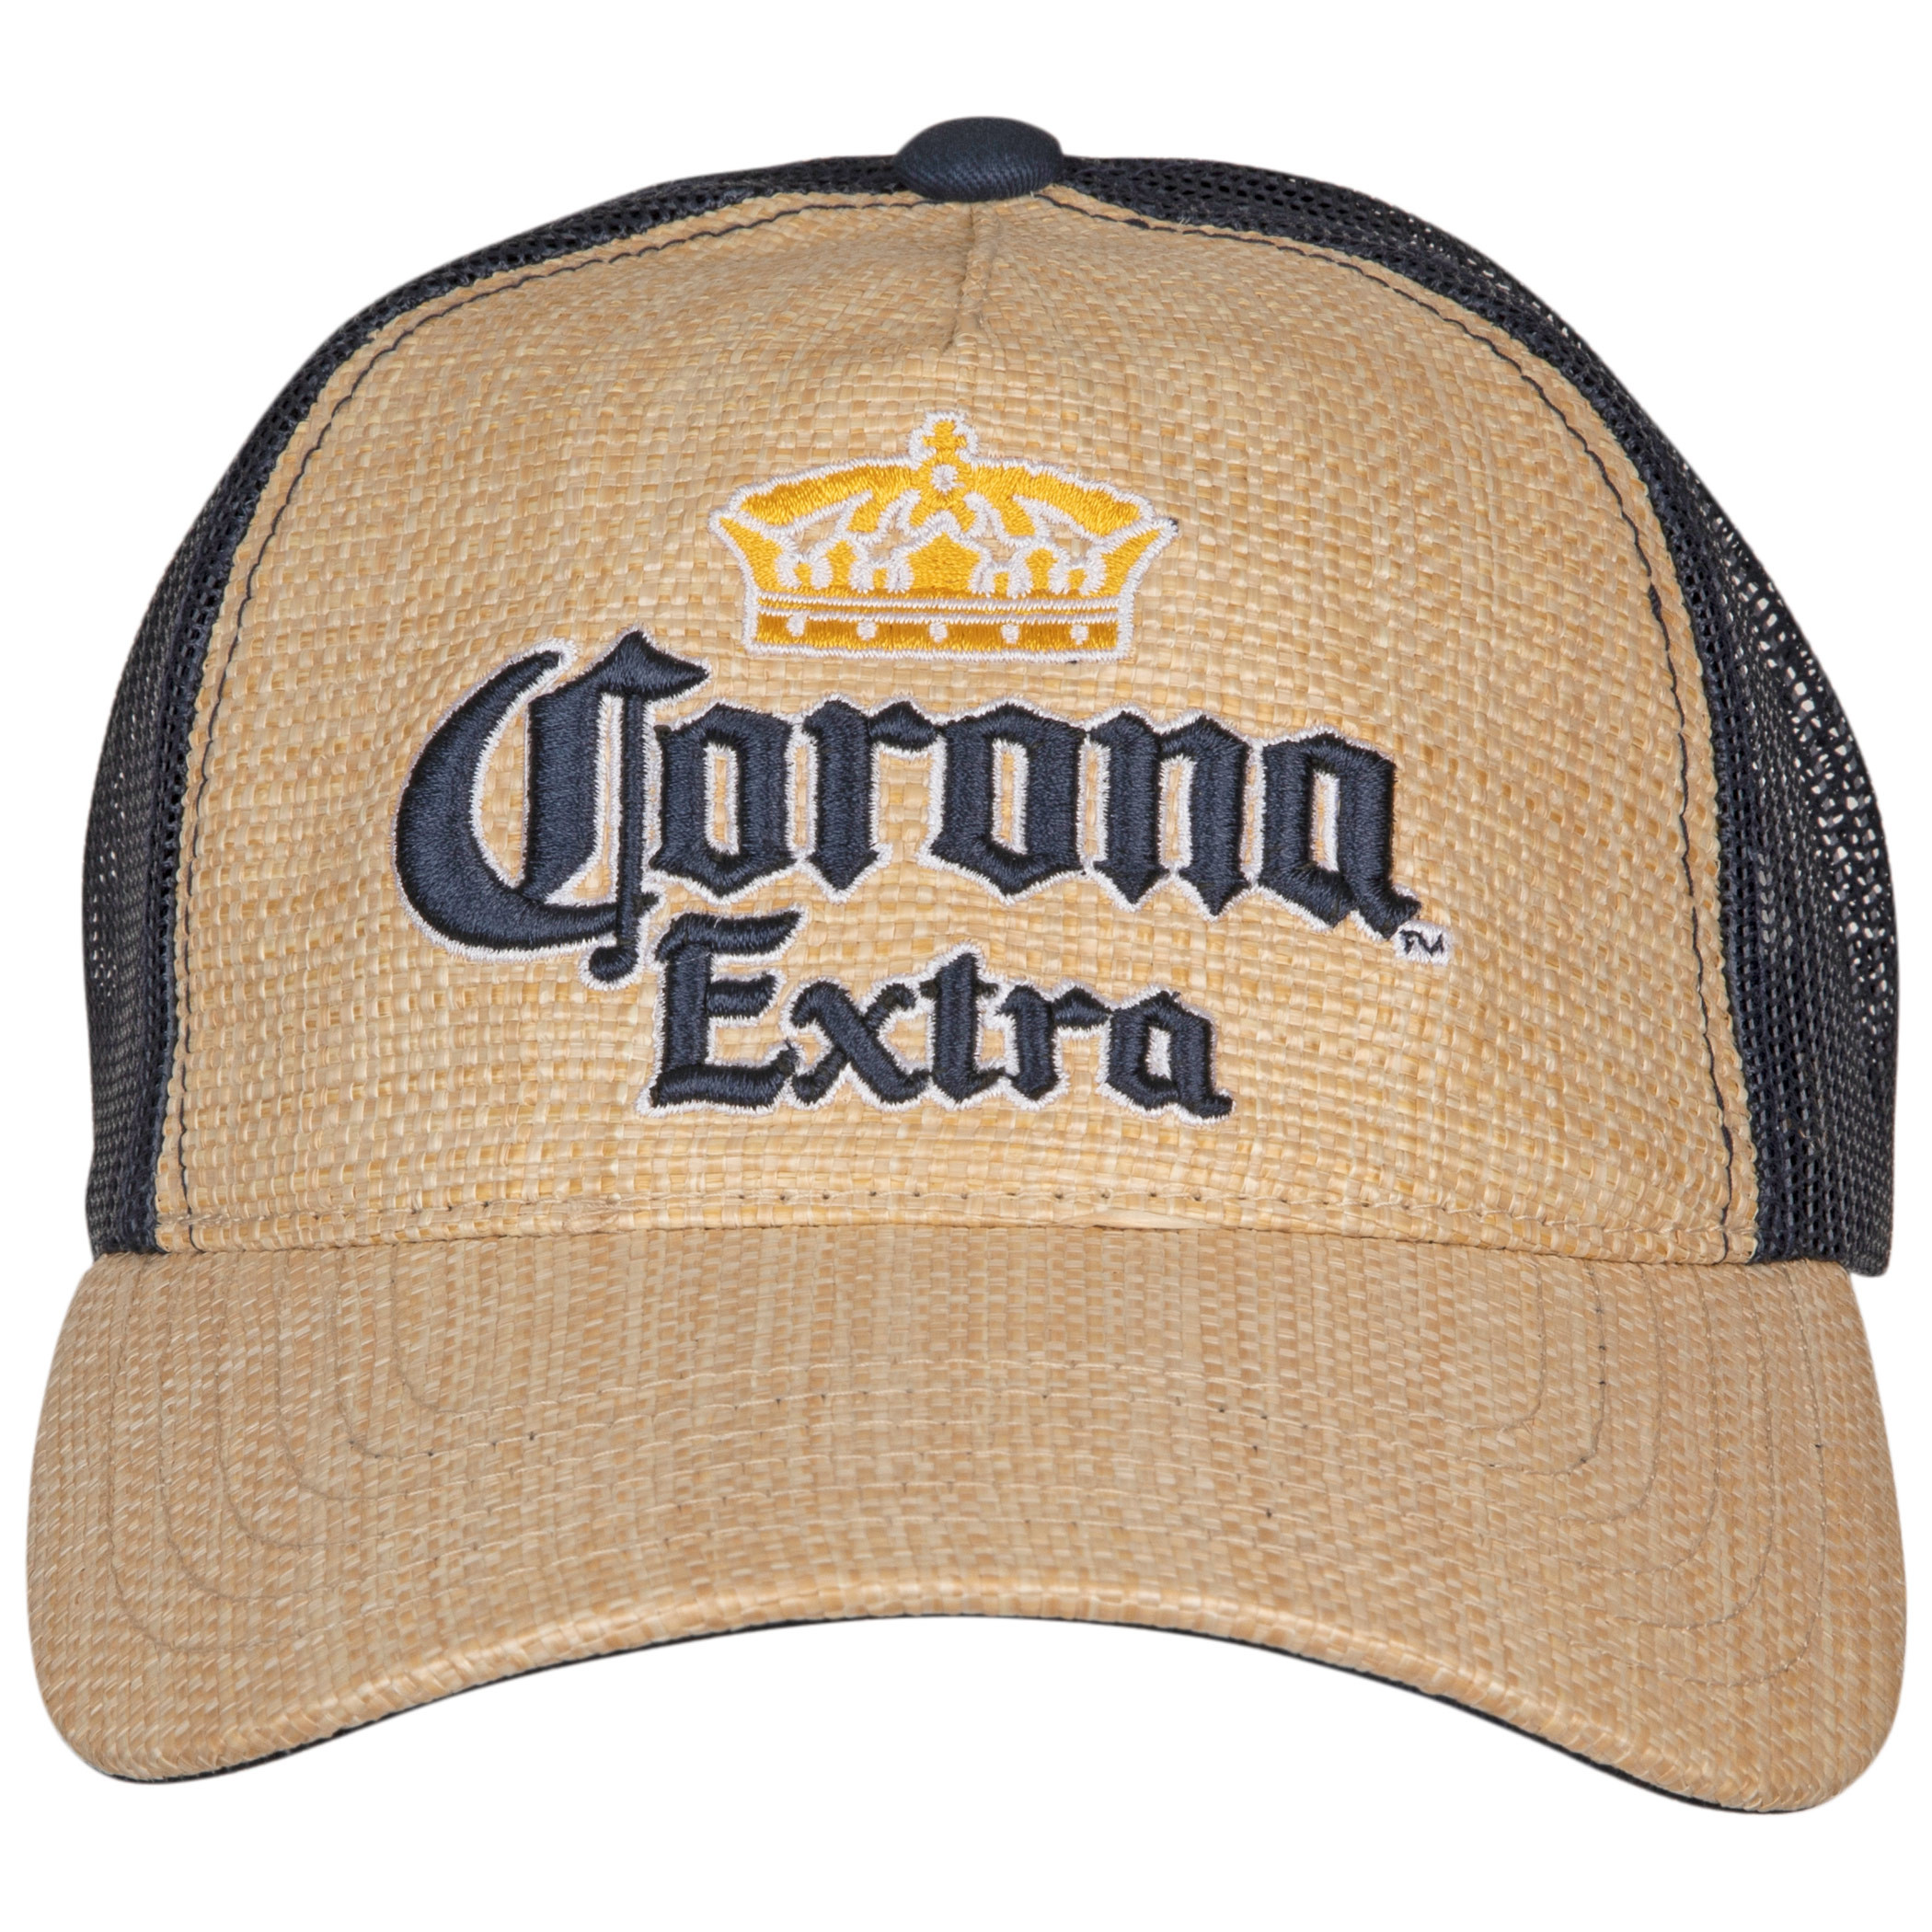 Corona Extra Logo Adjustable Snapback Mesh Trucker Hat